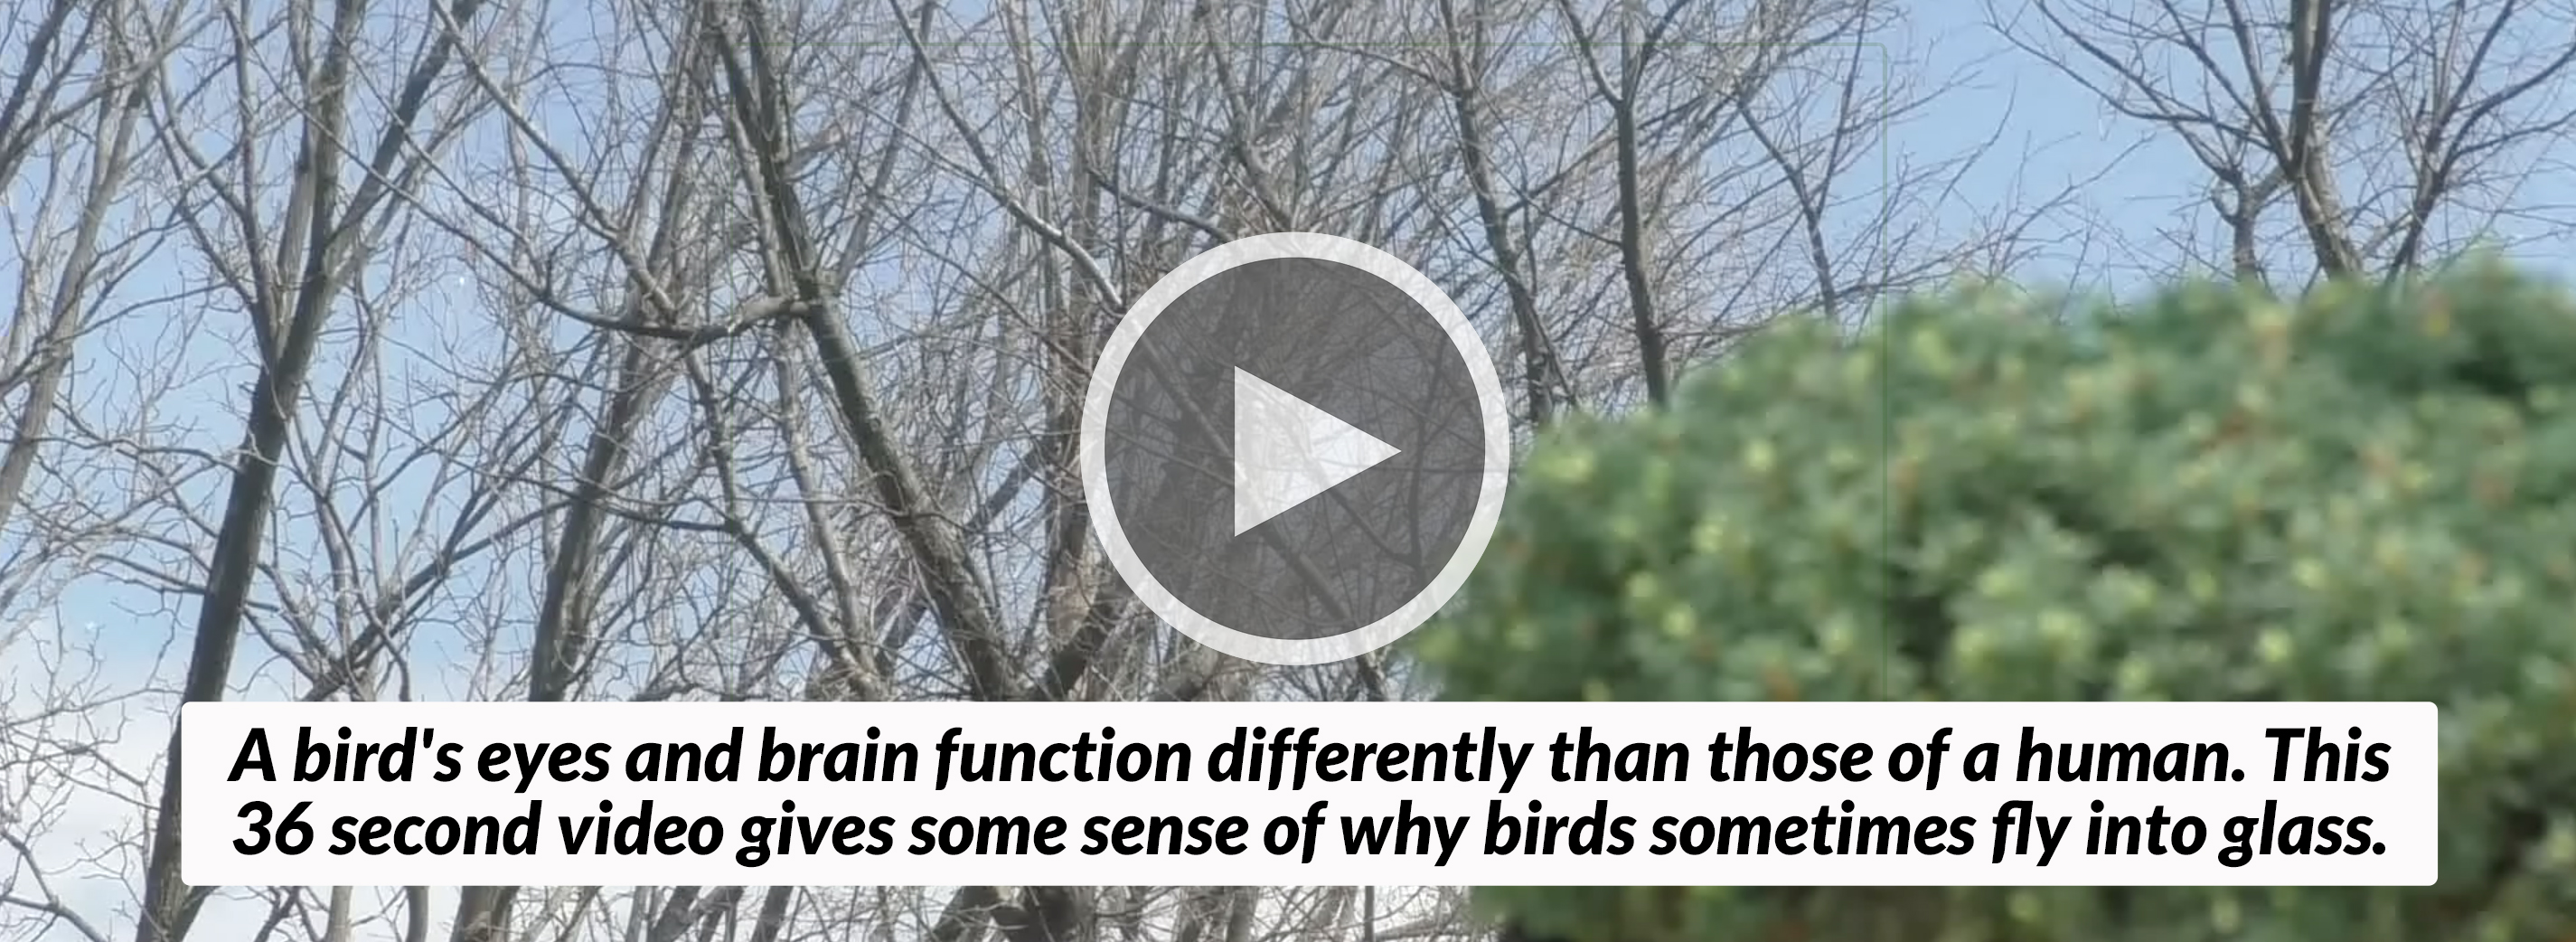 Acopian BirdSavers - Prevent Birds From Flying Into Windows